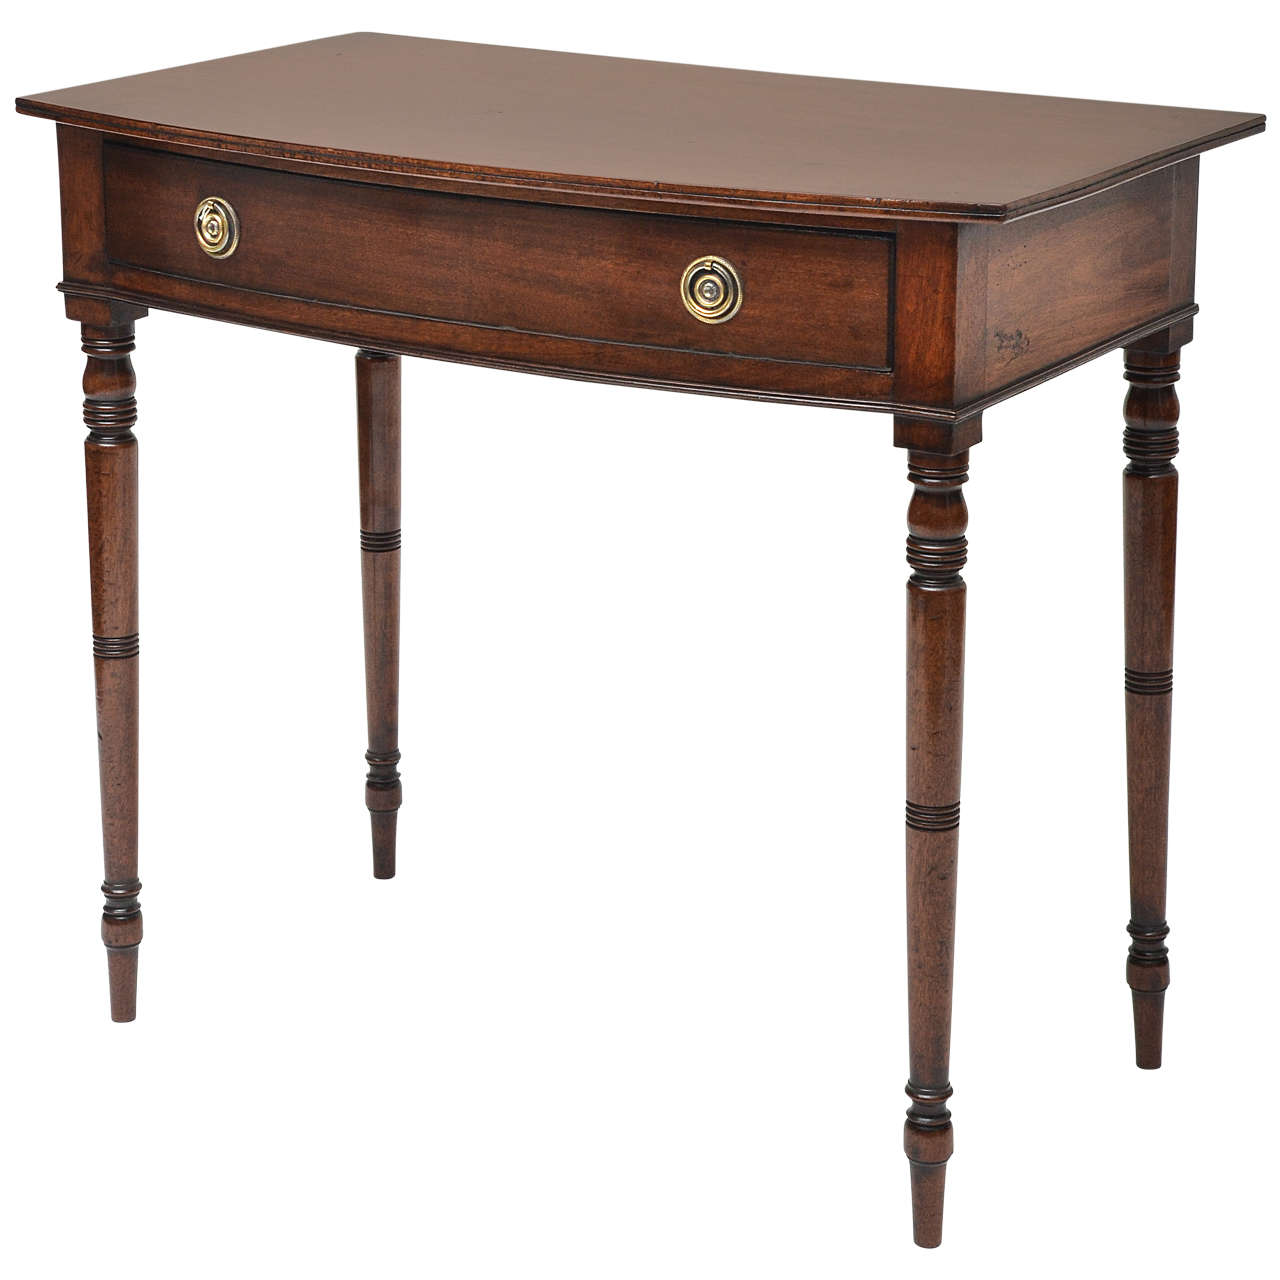 Early 19th Century English Regency, Mahogany Bow-Front Side Table